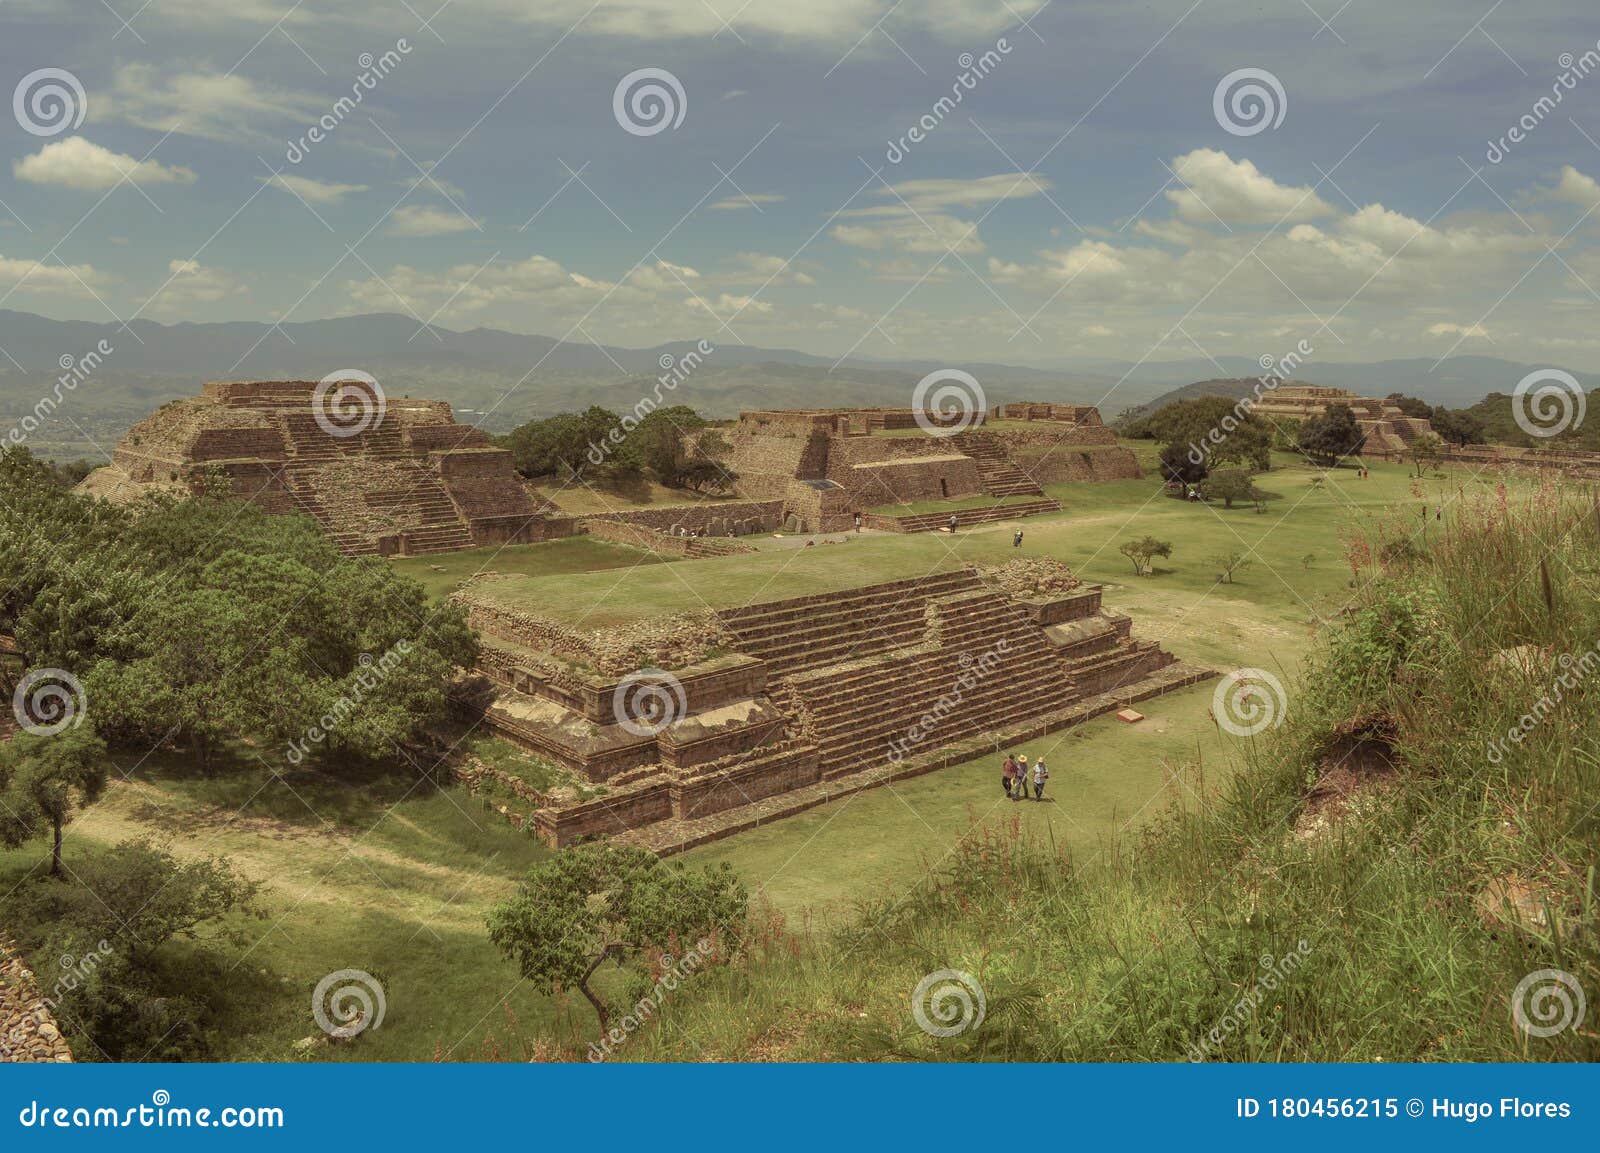 priramidal foundations of an ancient city